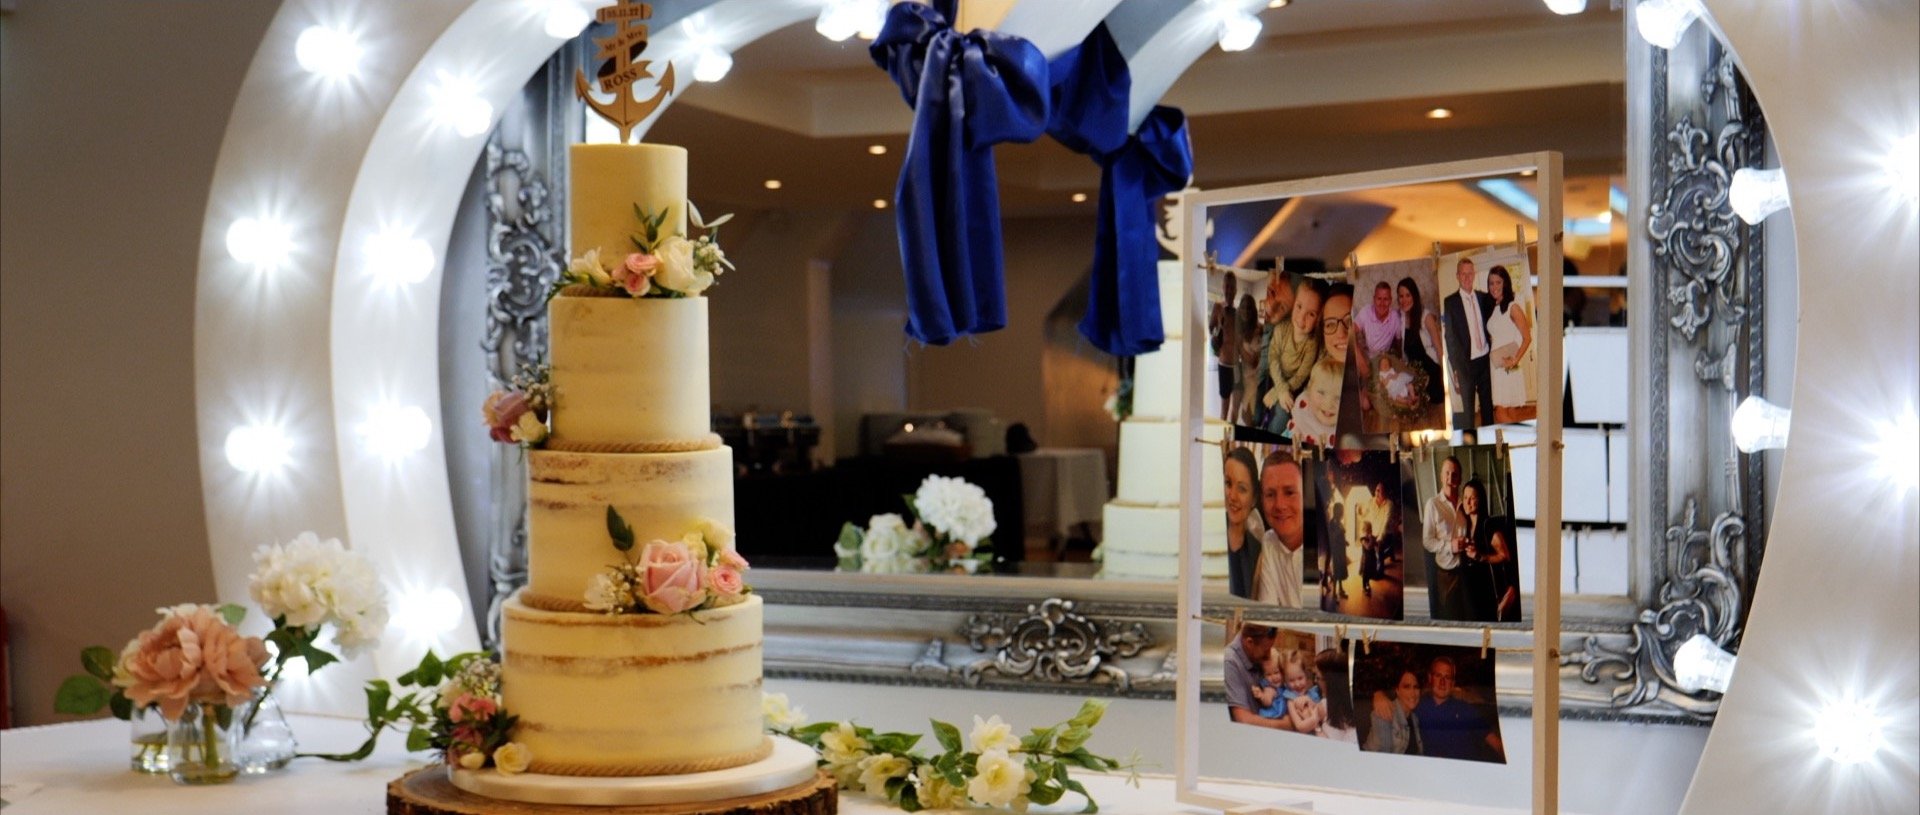 Wedding cake video Essex.jpg